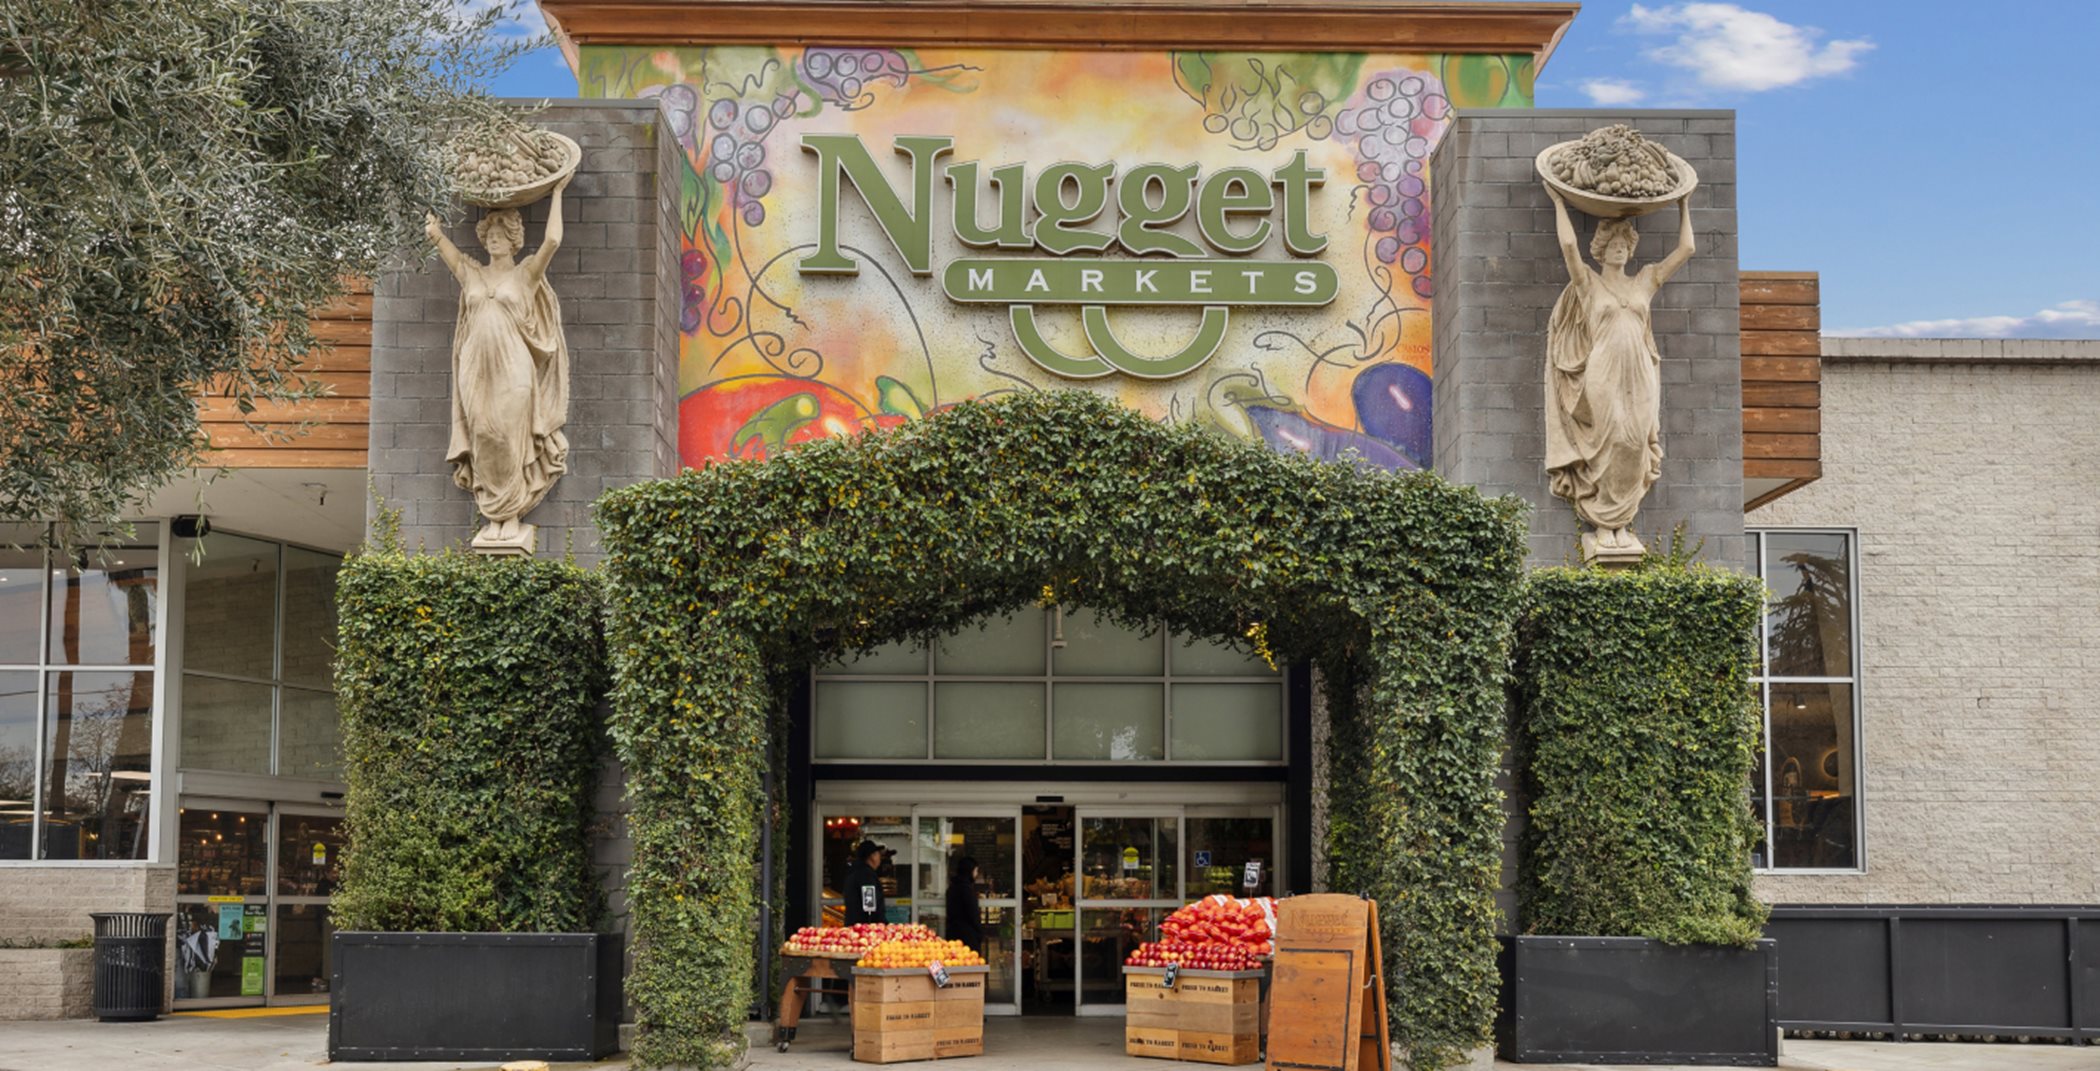 Nugget Markets storefront